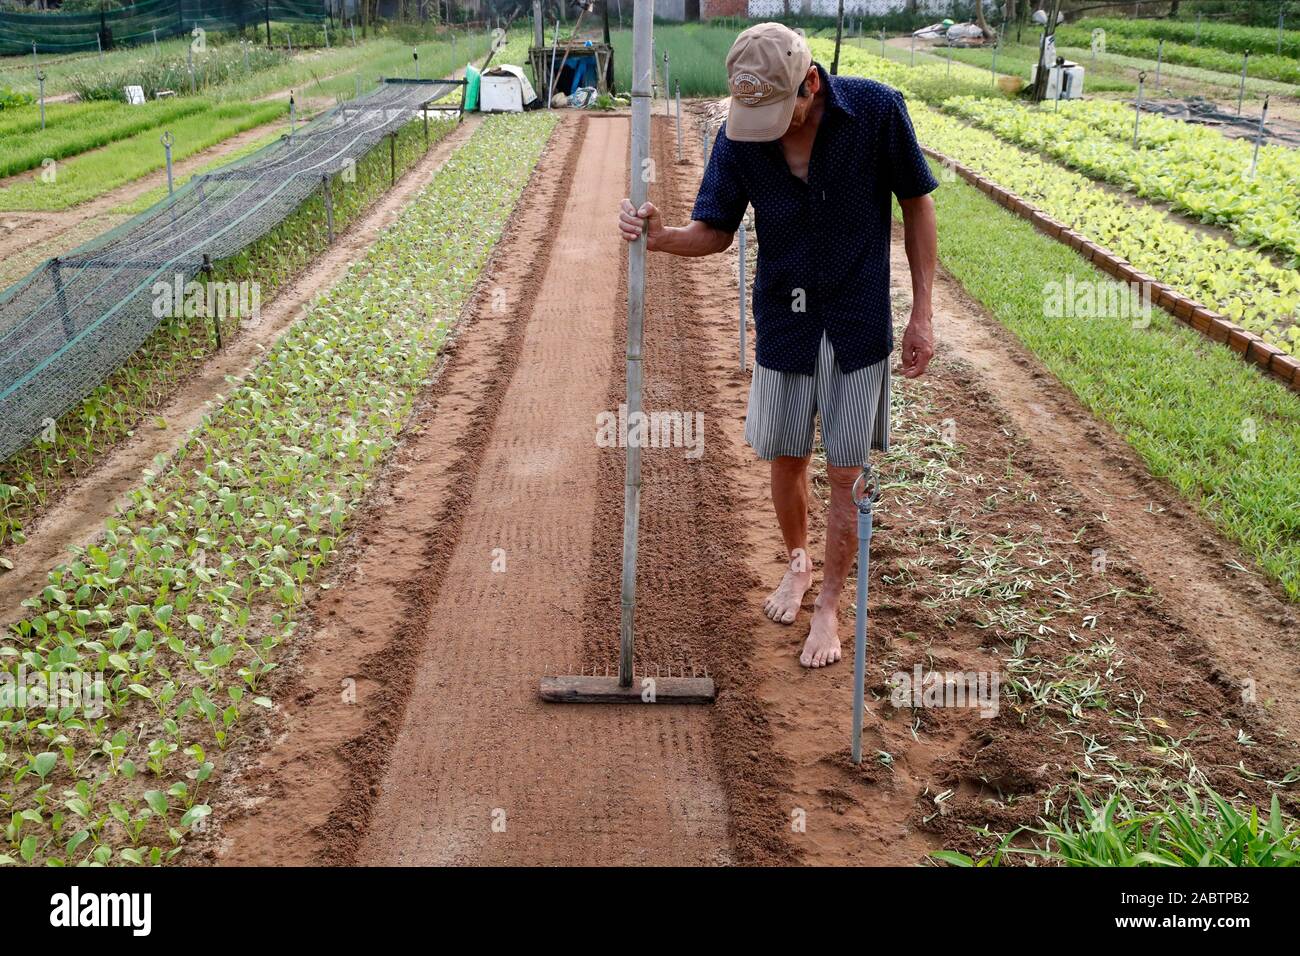 Organic vegetable gardens in Tra Que Village. Farmer at work.  Hoi An. Vietnam. Stock Photo